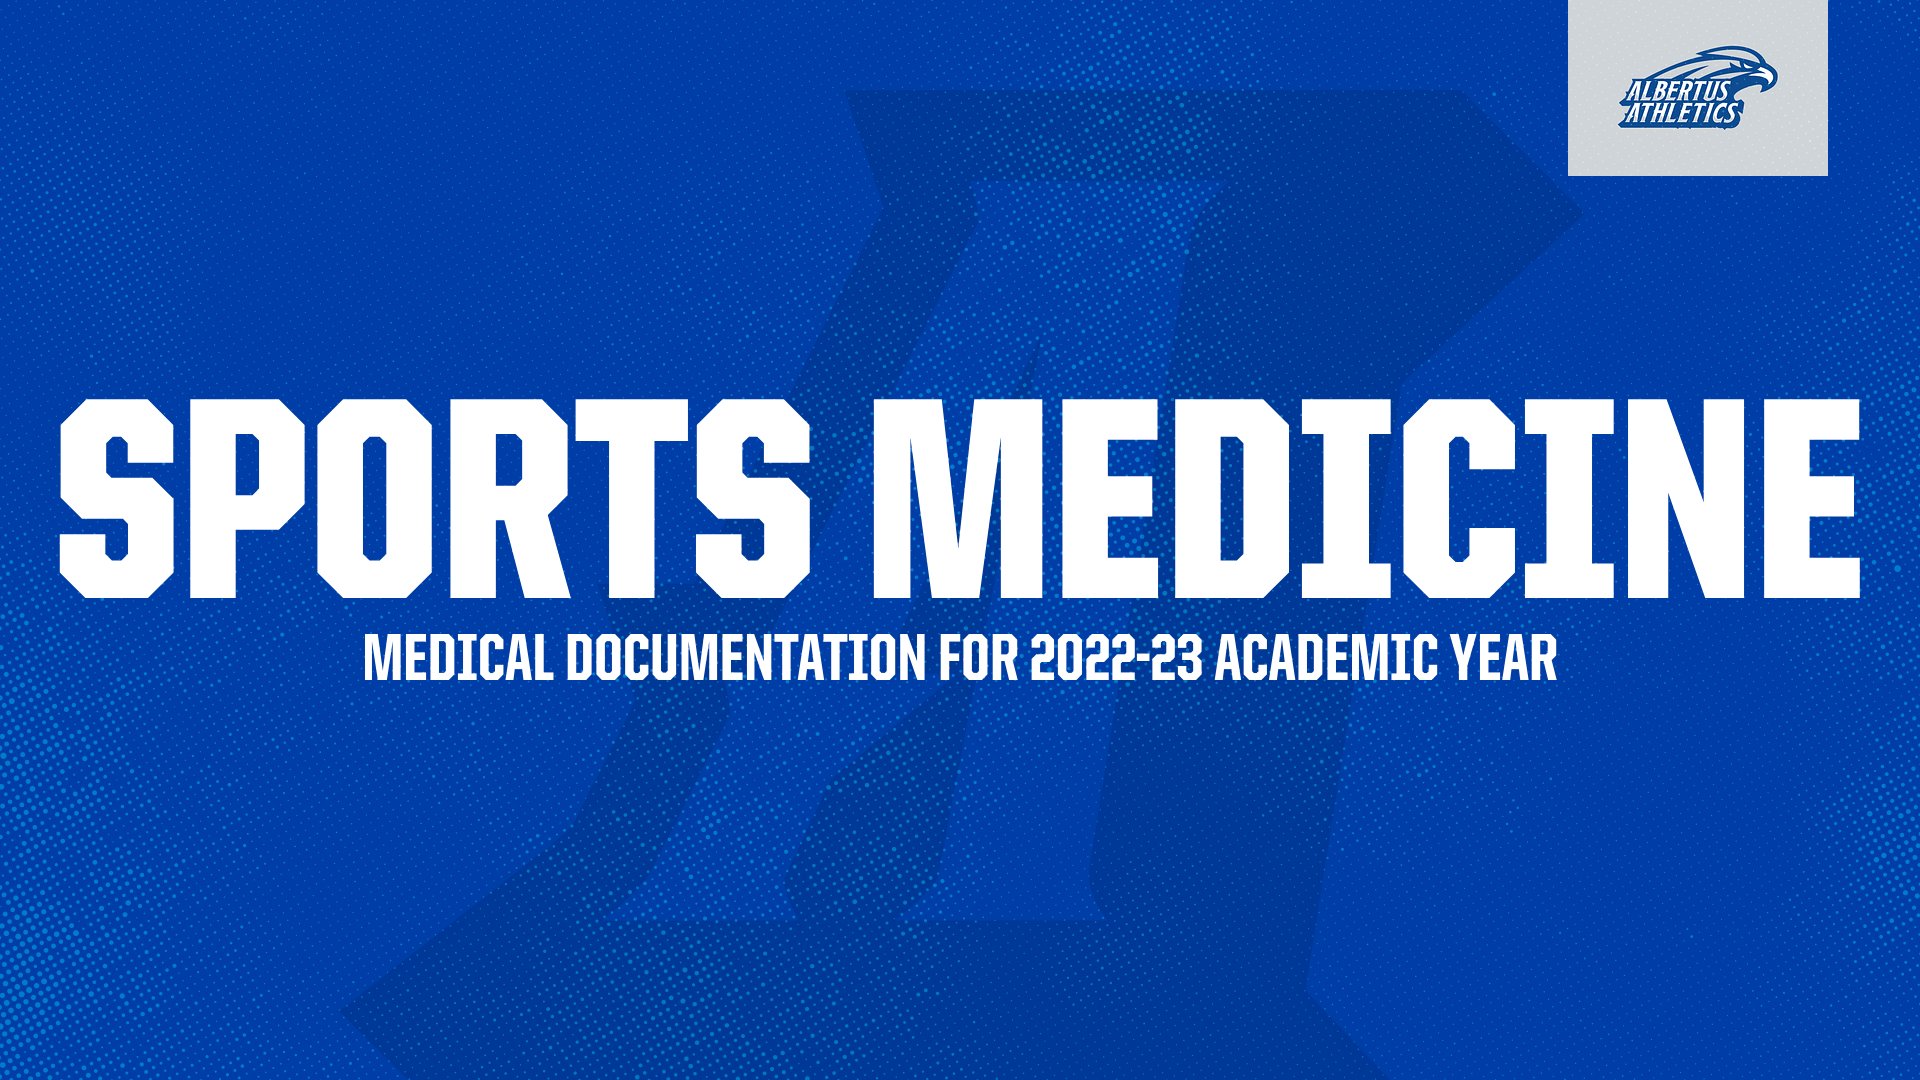 Sports Medicine - Medical Documentation for 2022-23 Academic Year